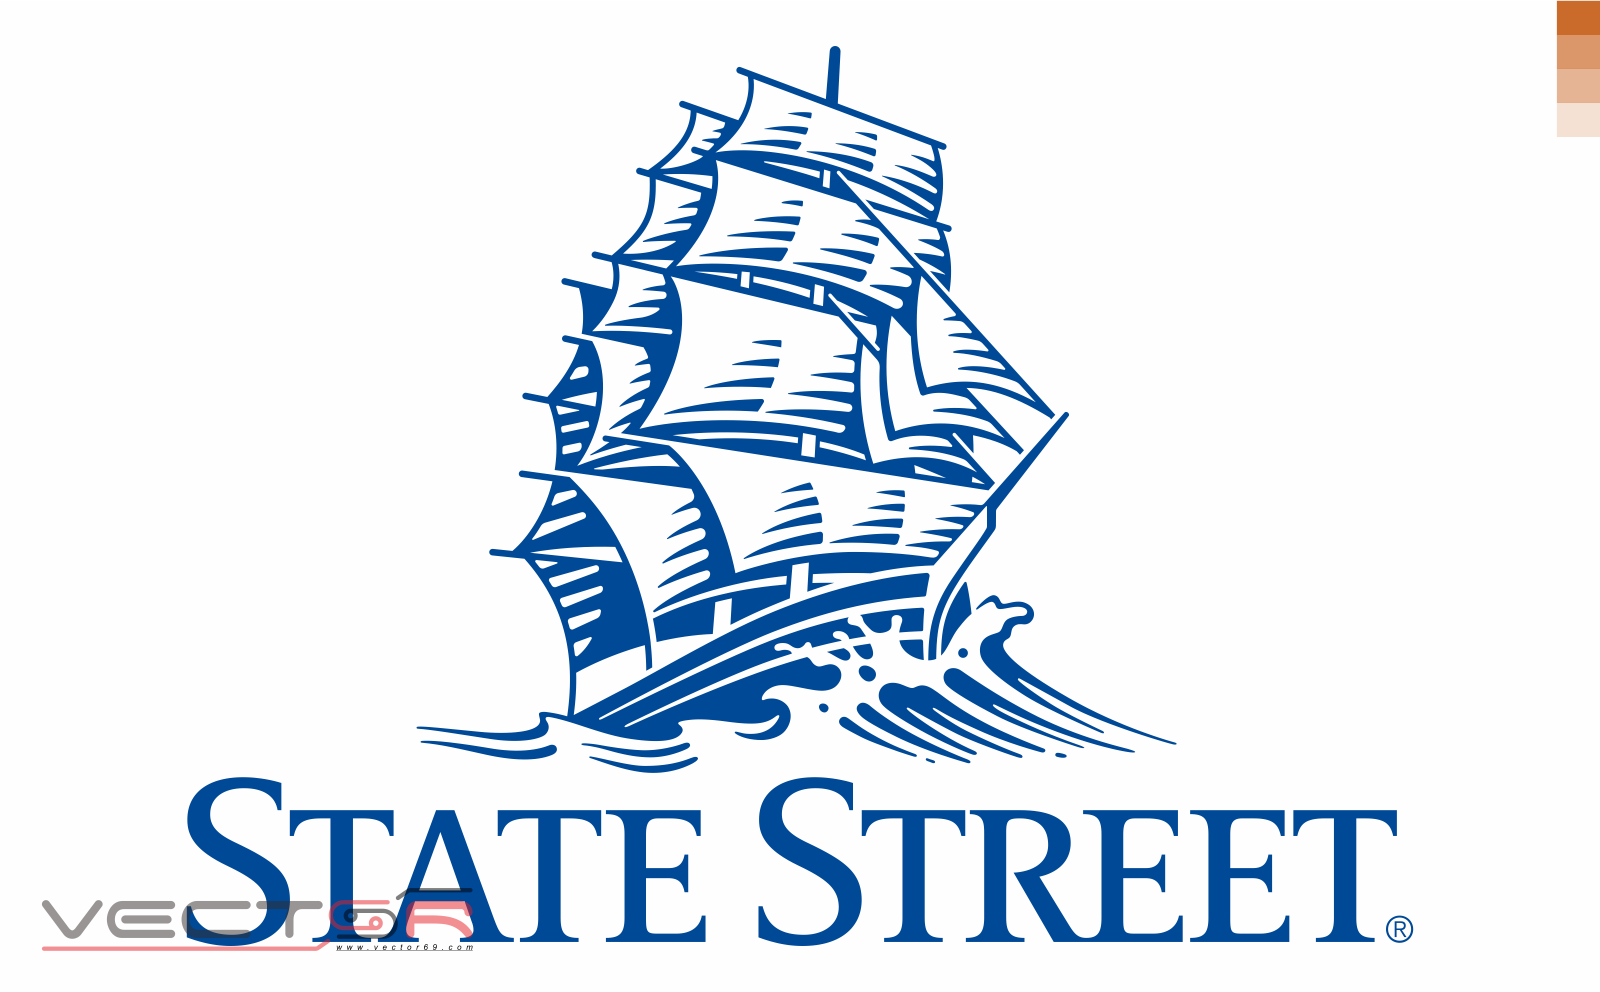 State Street Corporation Logo - Download Vector File AI (Adobe Illustrator)